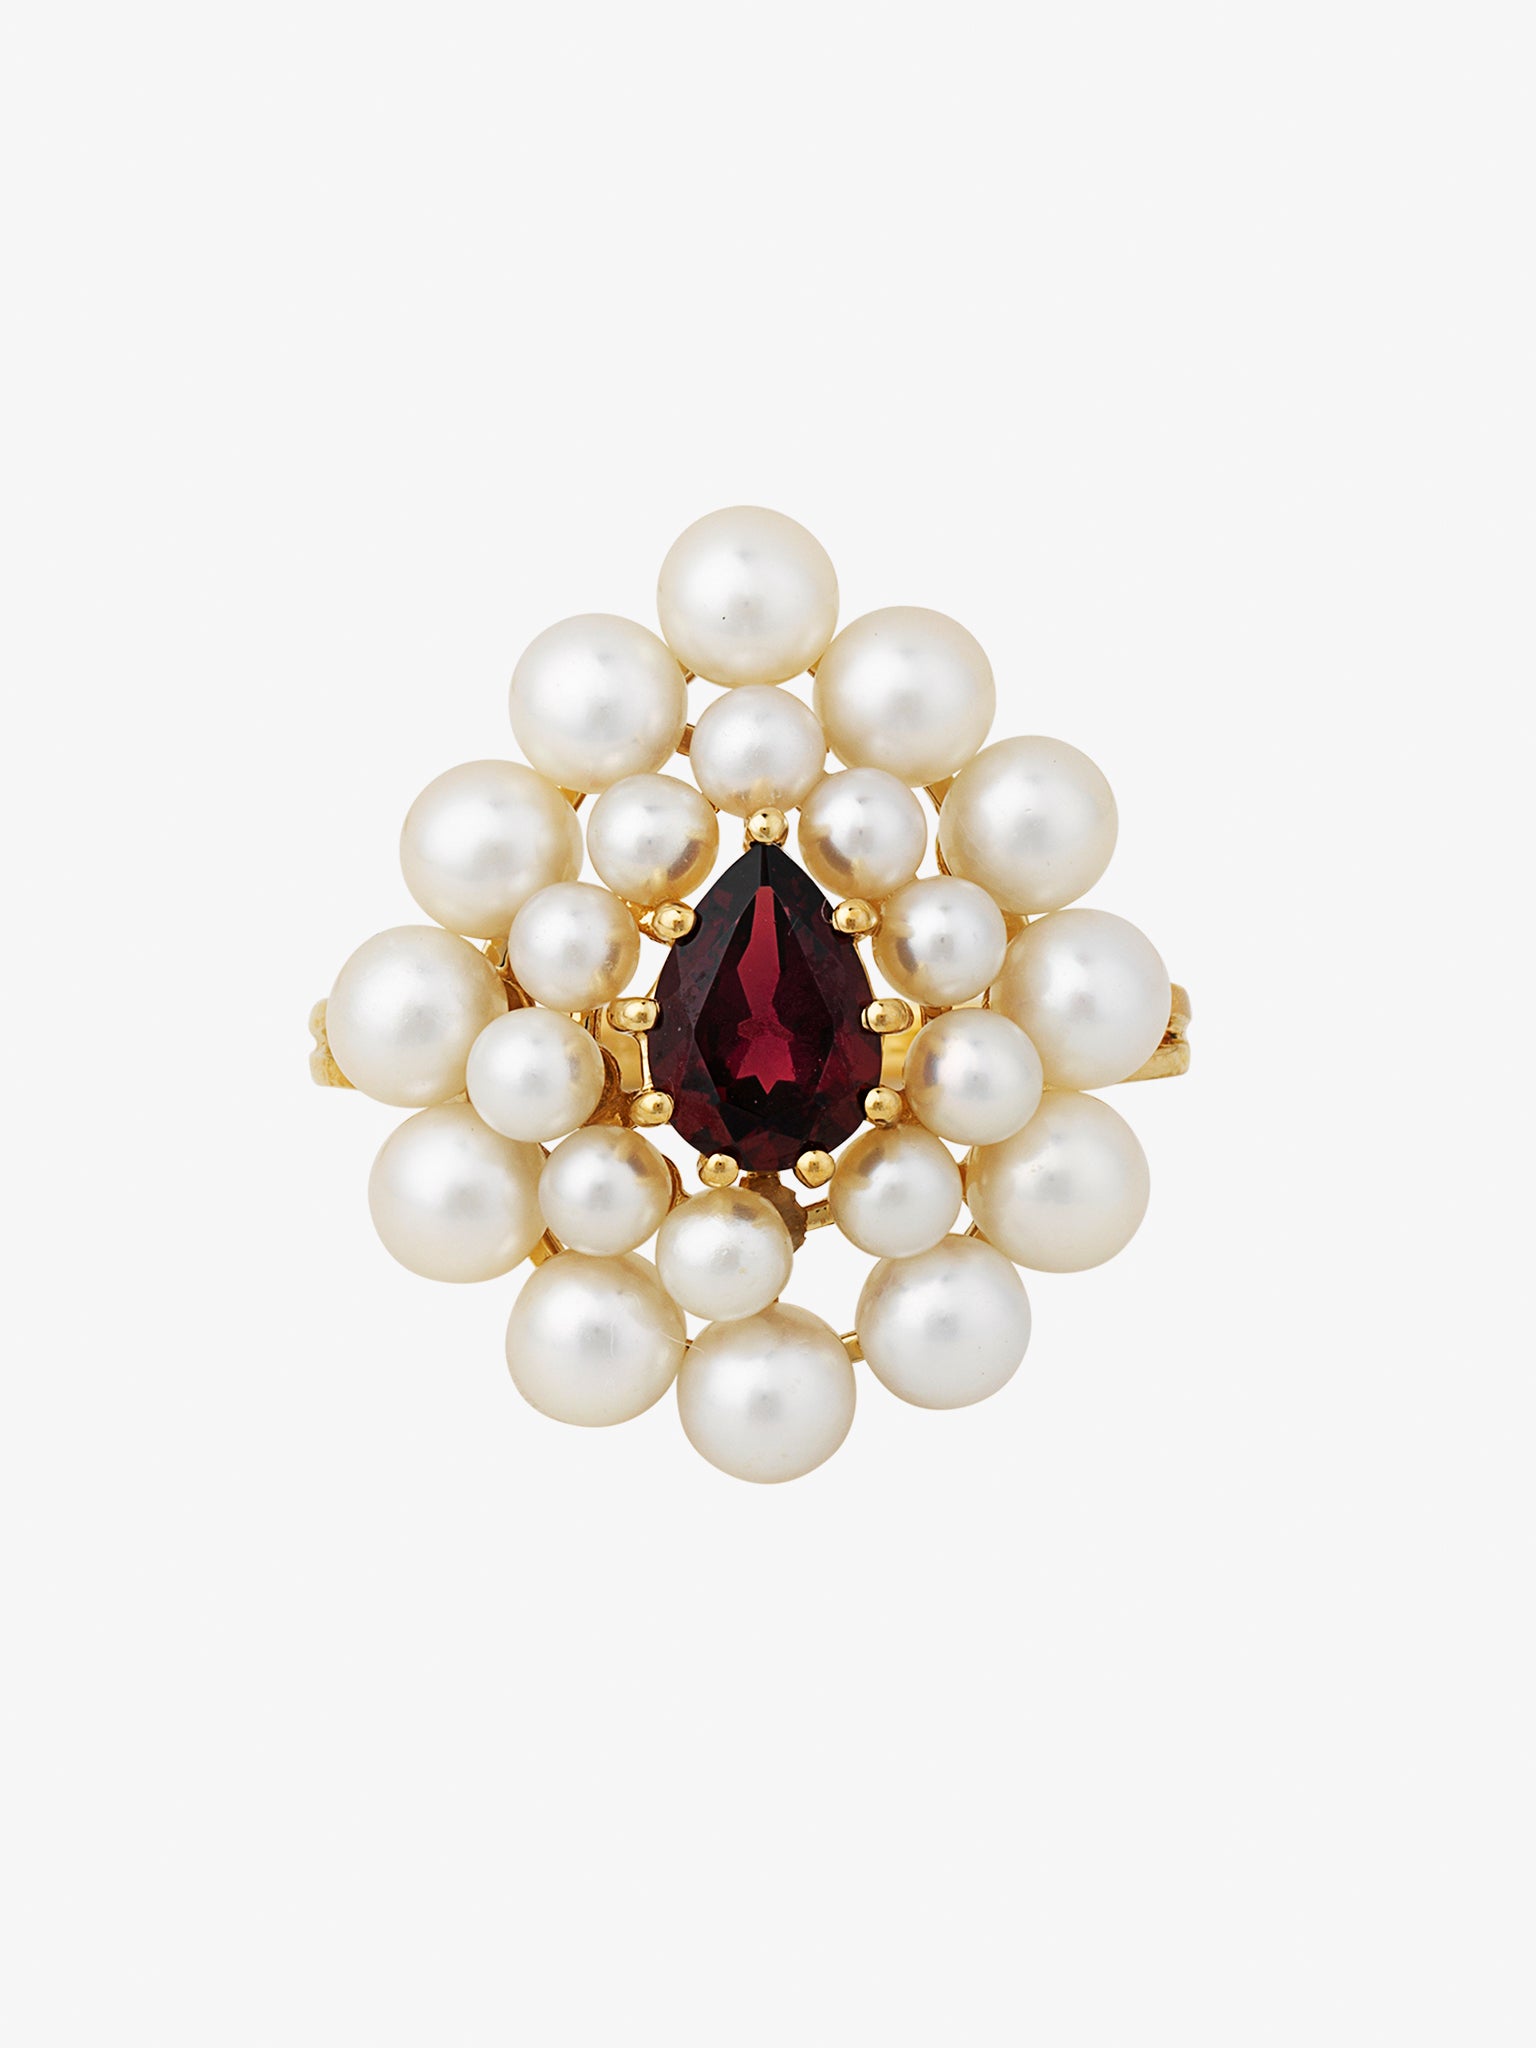 Cotillon pearl and garnet ring